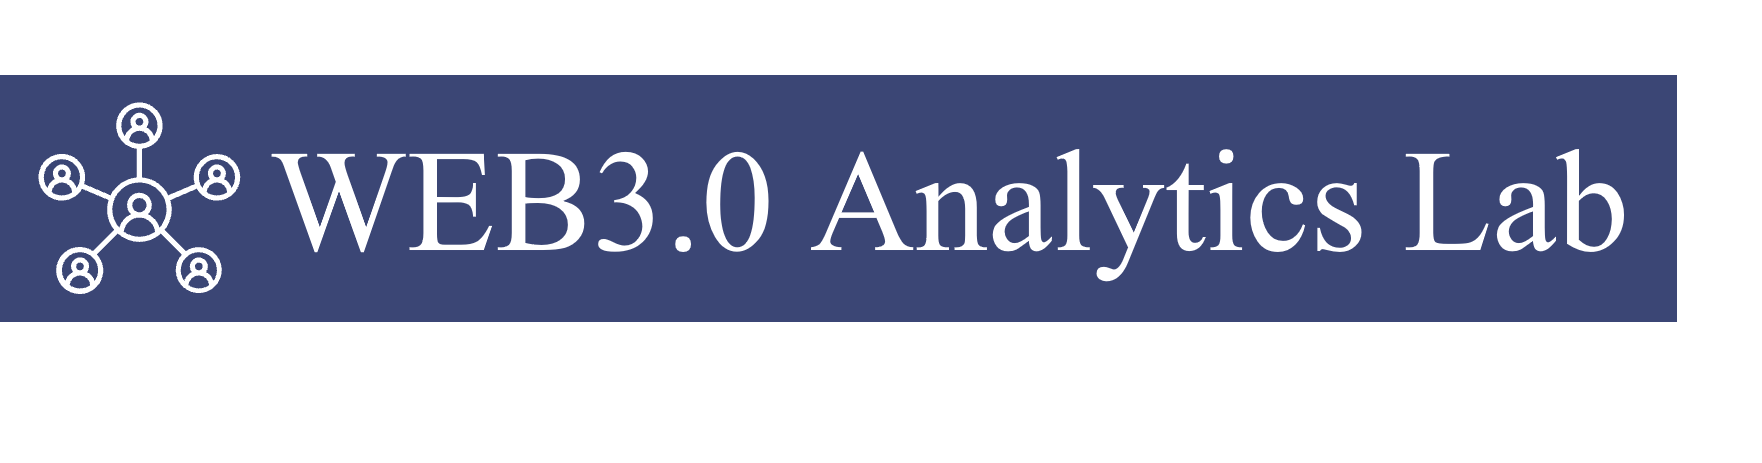 Web3.0 Analytics Lab